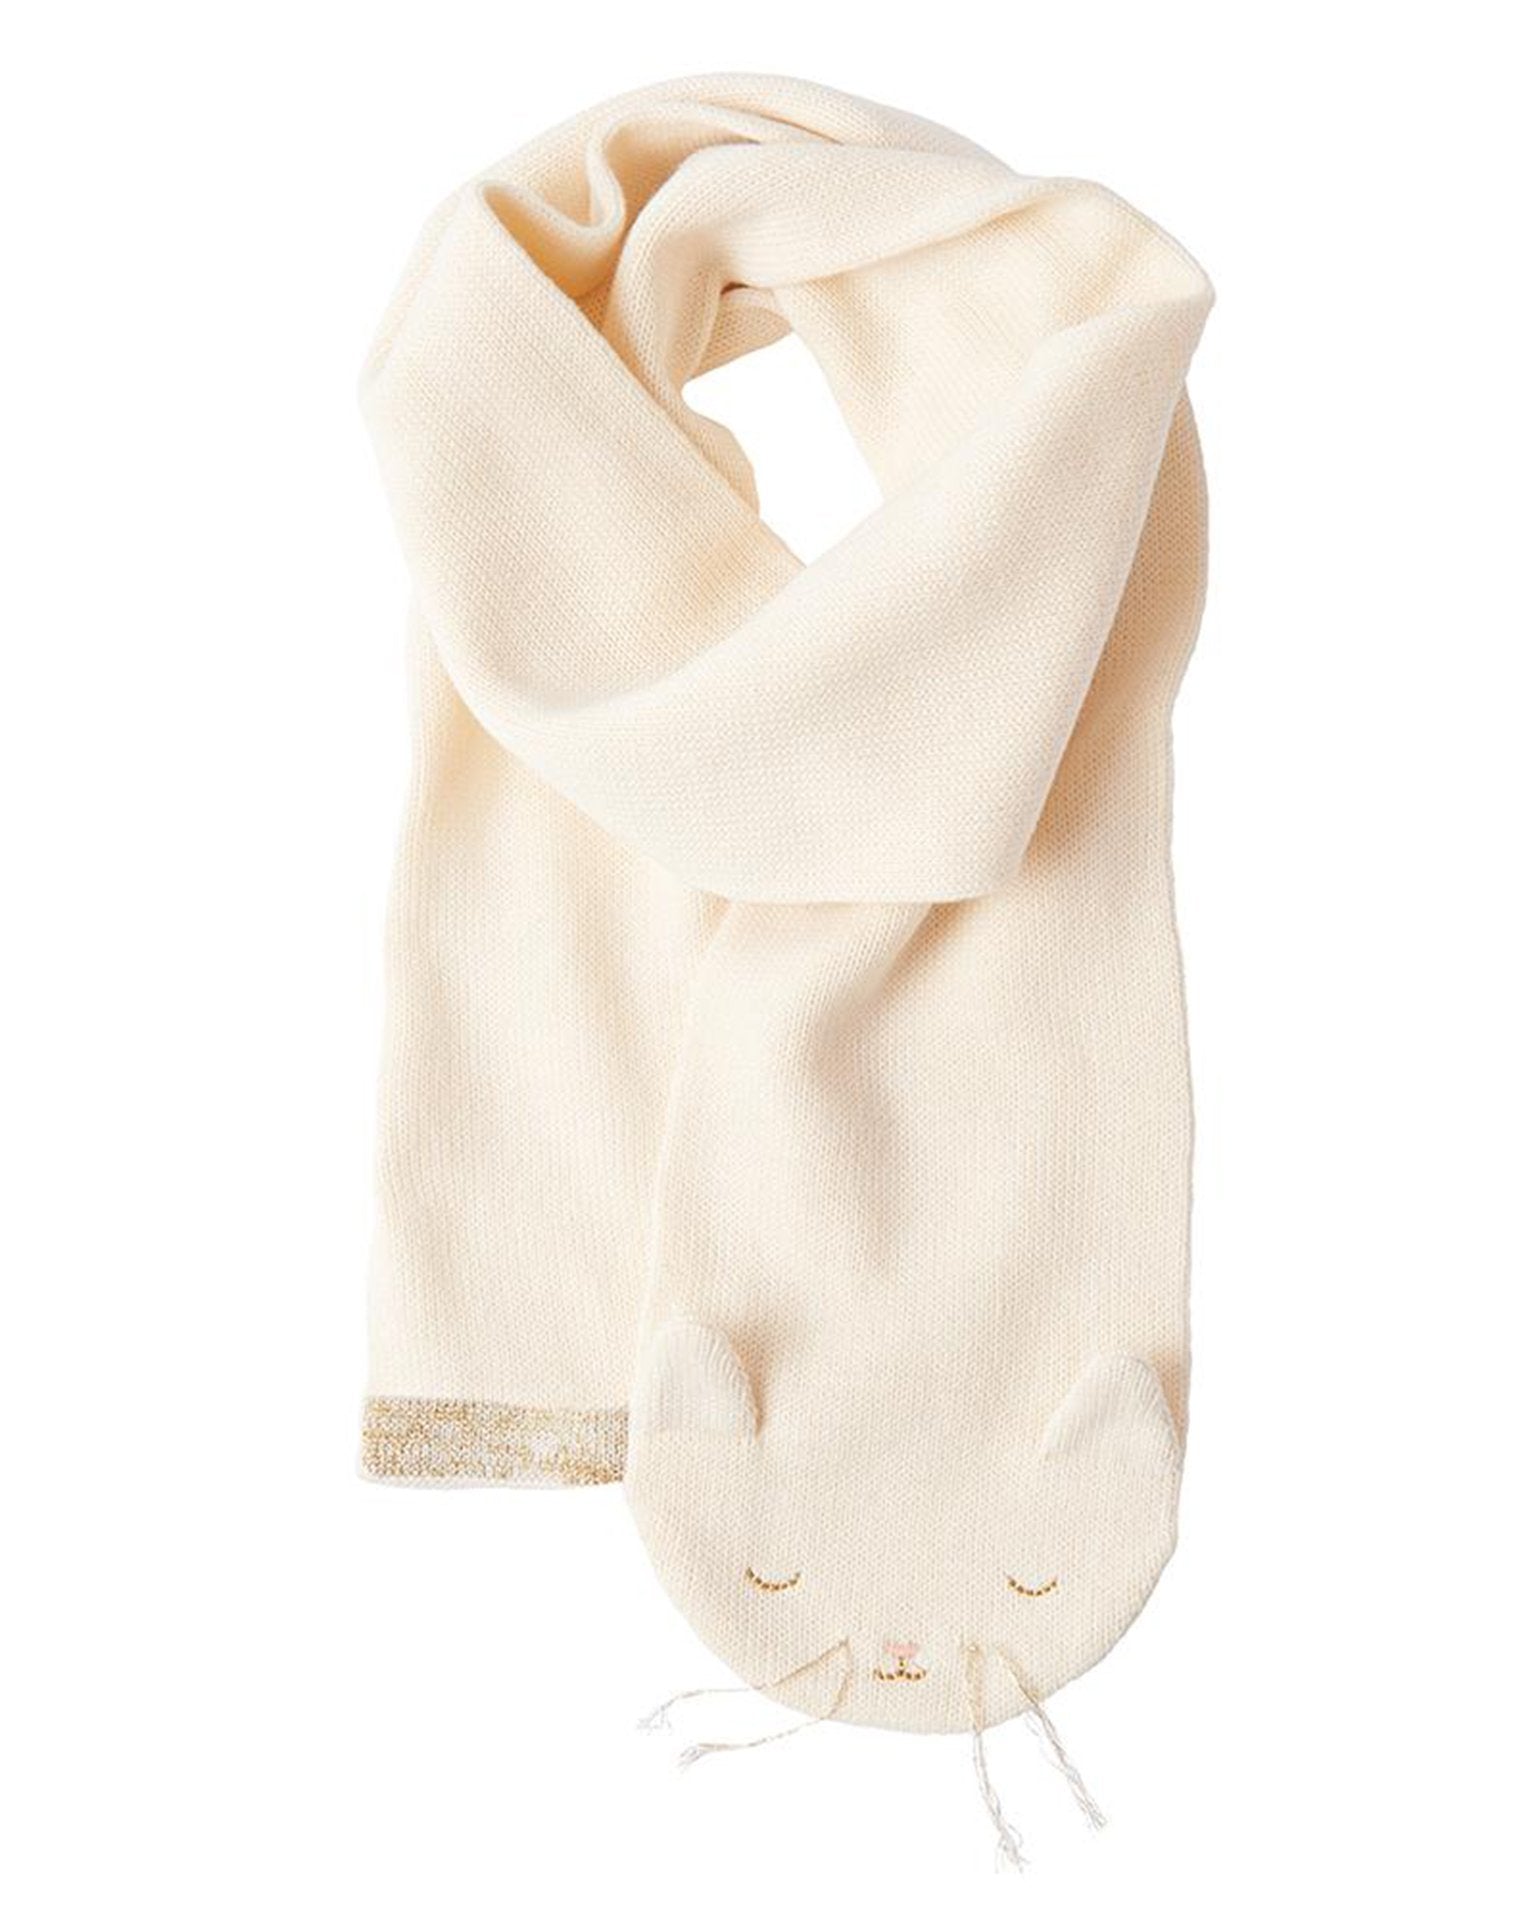 Little meri meri accessories knitted cat scarf